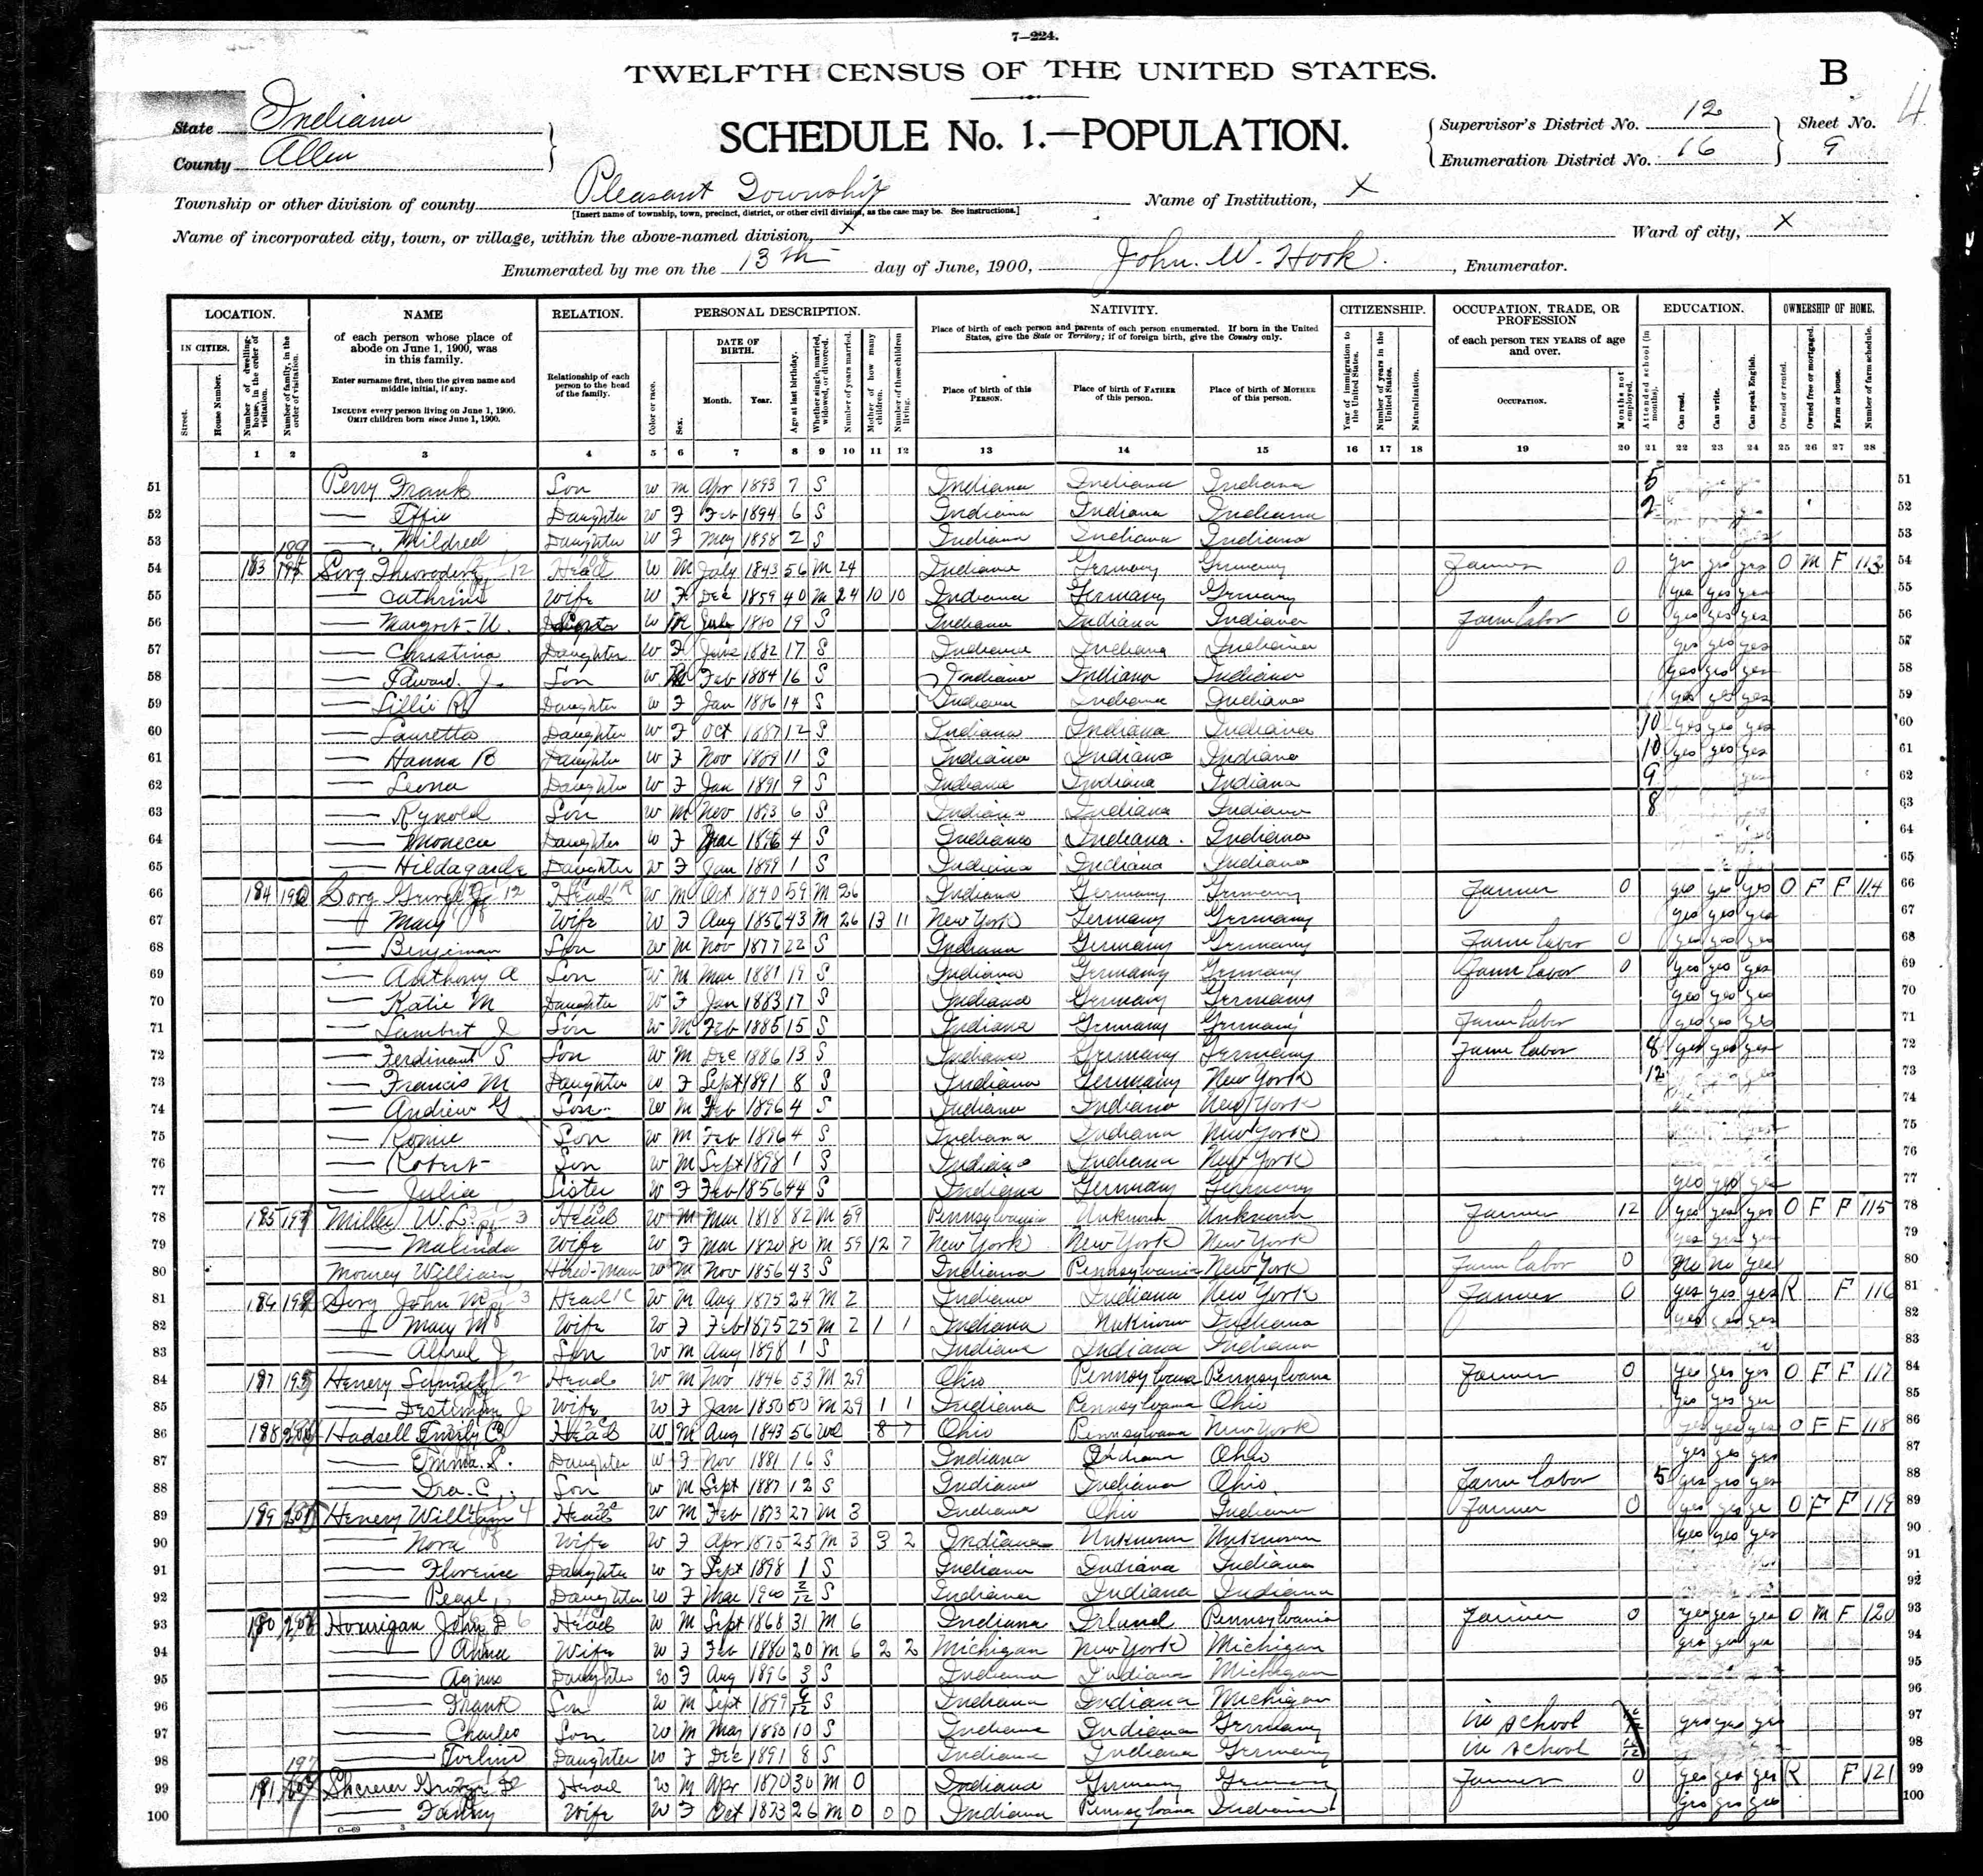 Hourigan 1900 census record, Indiana